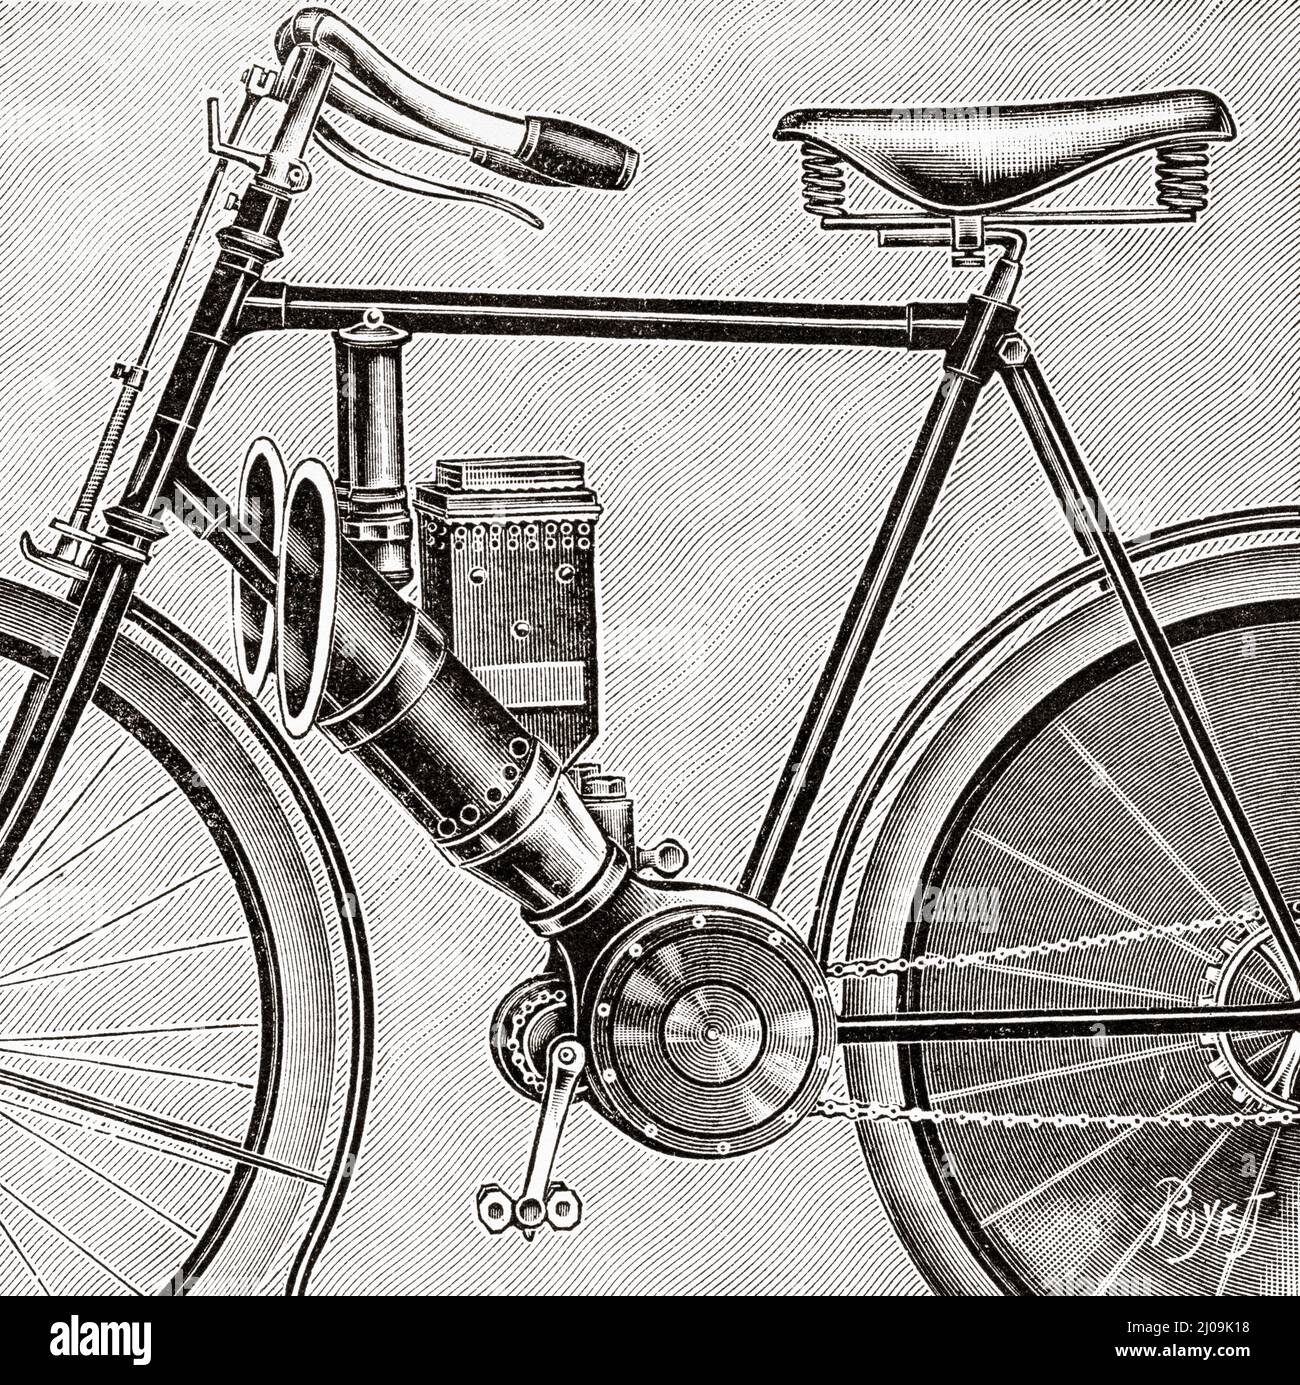 Motor cycling -Fotos und -Bildmaterial in hoher Auflösung – Alamy